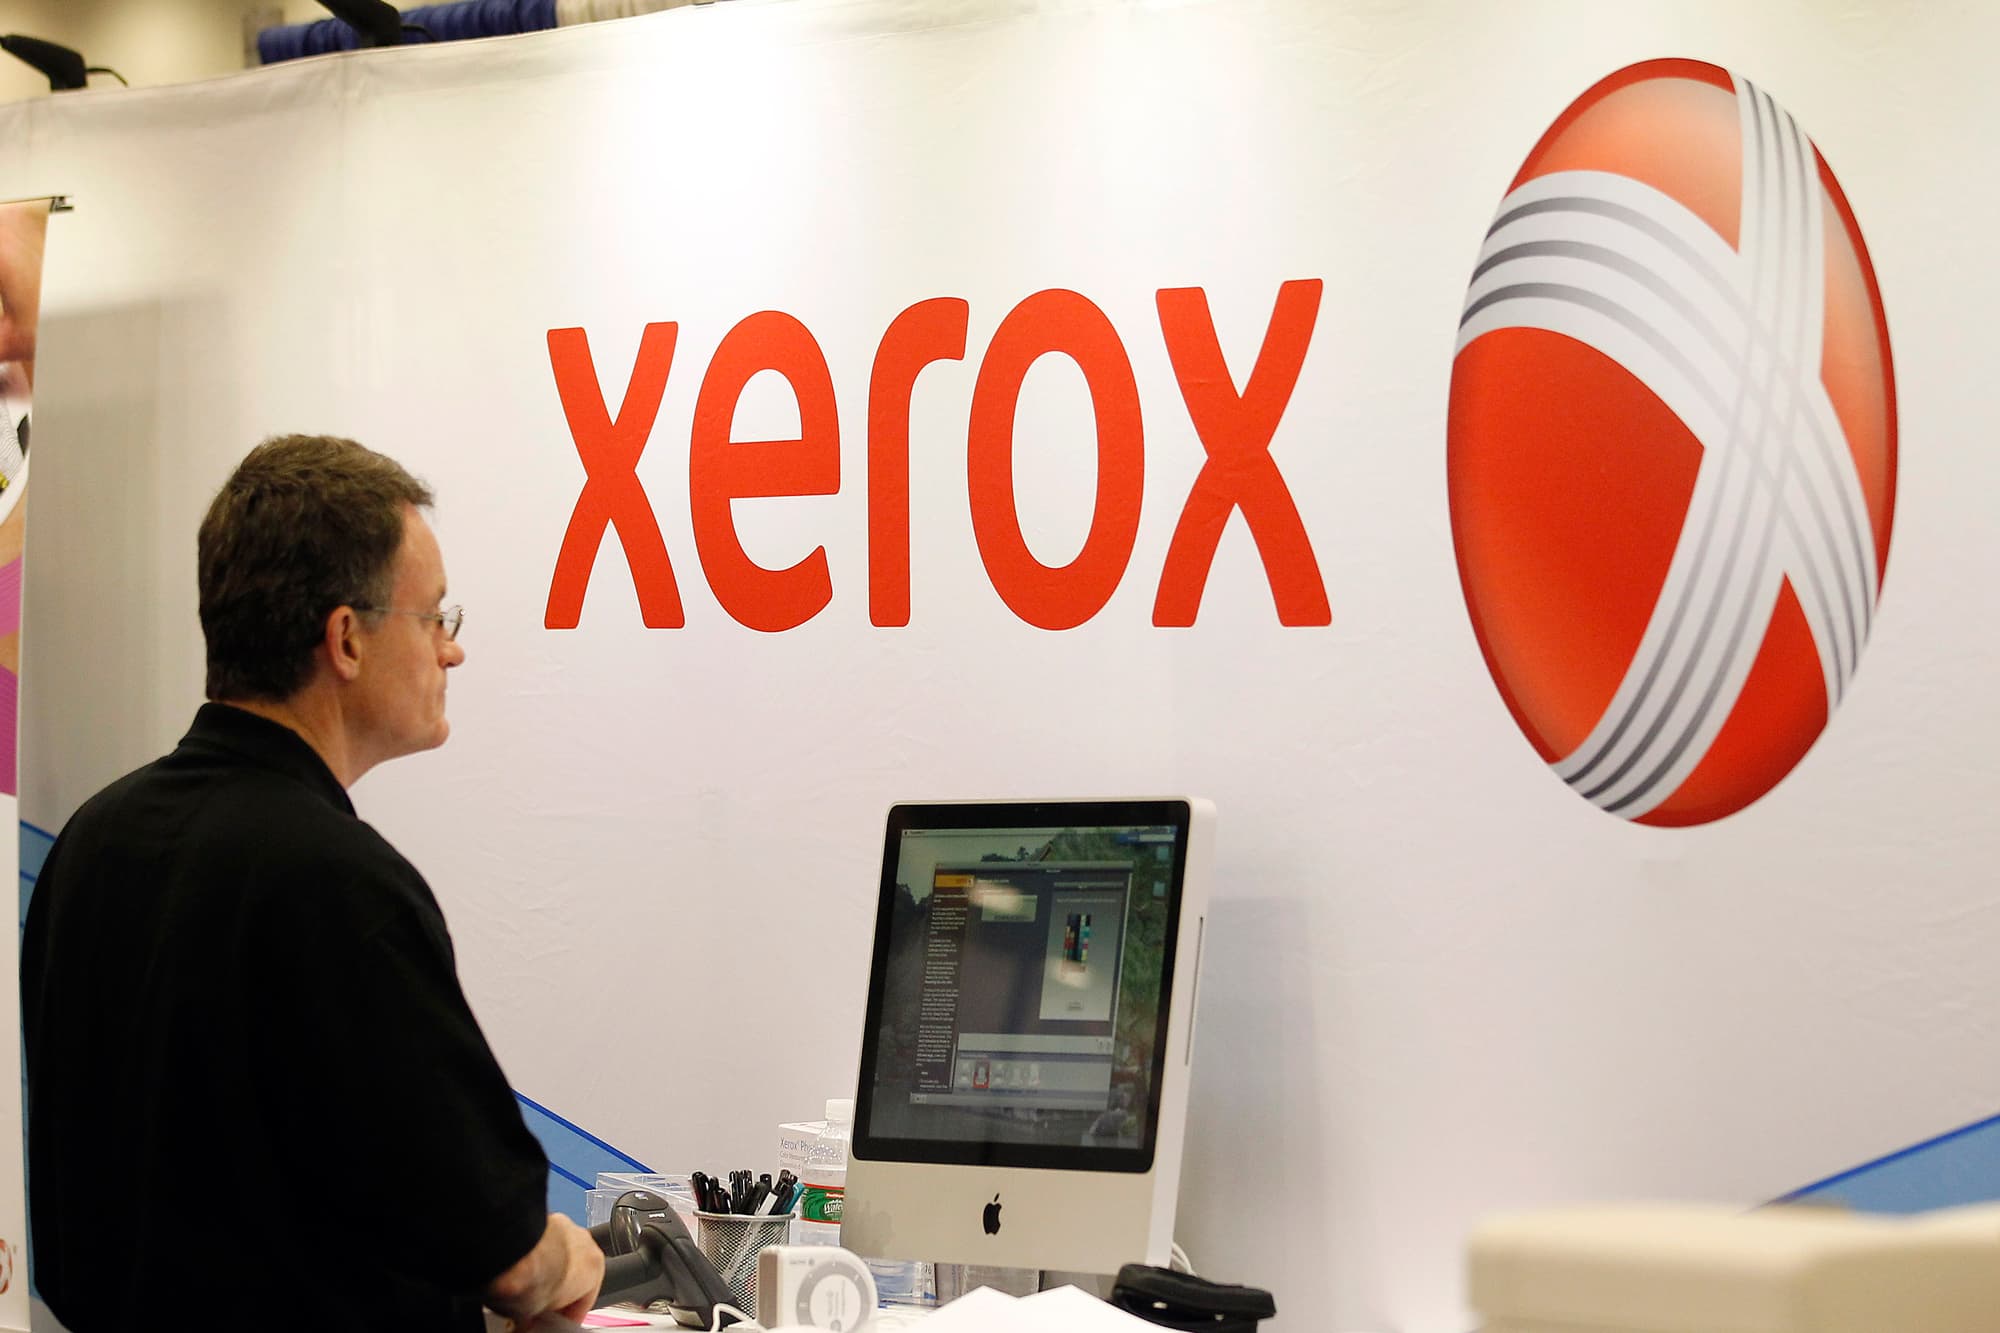 Xerox and conduent stock ninas nuances